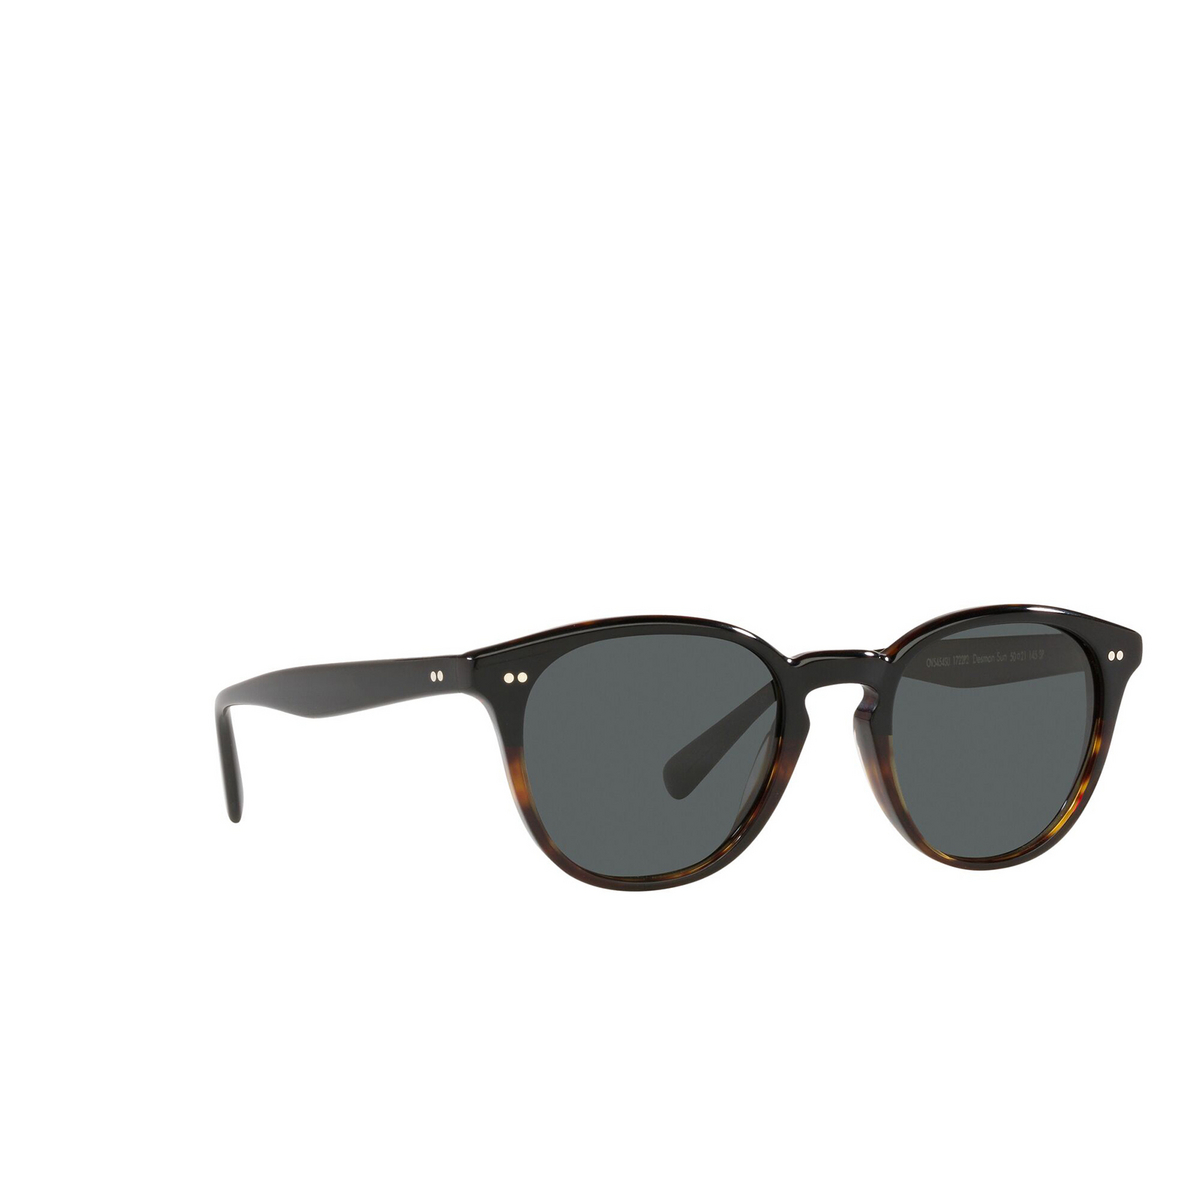 Oliver Peoples® Square Sunglasses: Desmon Sun OV5454SU color Black / 362 Gradient 1722P2 - three-quarters view.